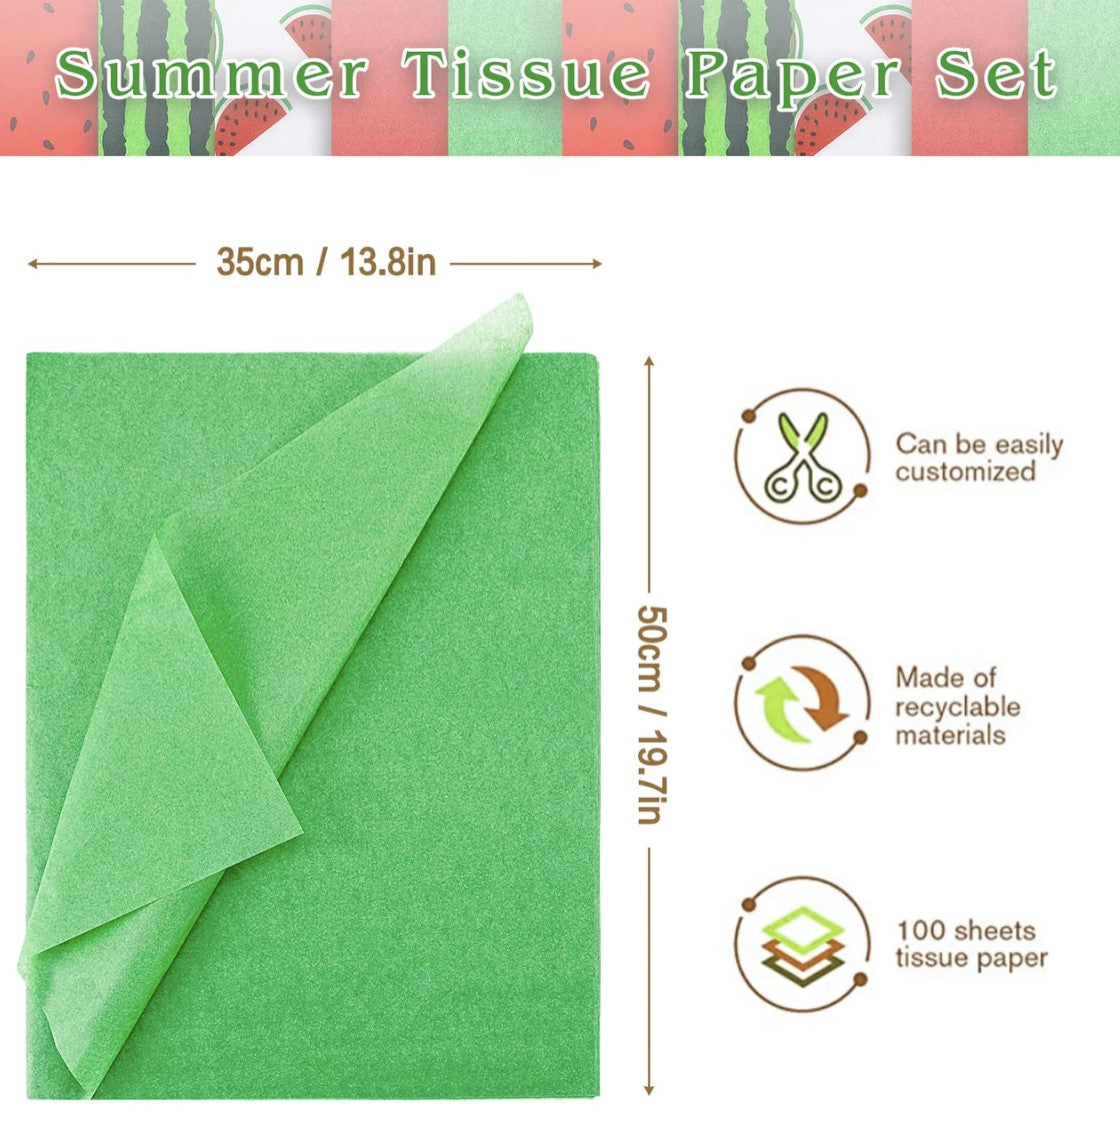 Watermelon theme tissue paper